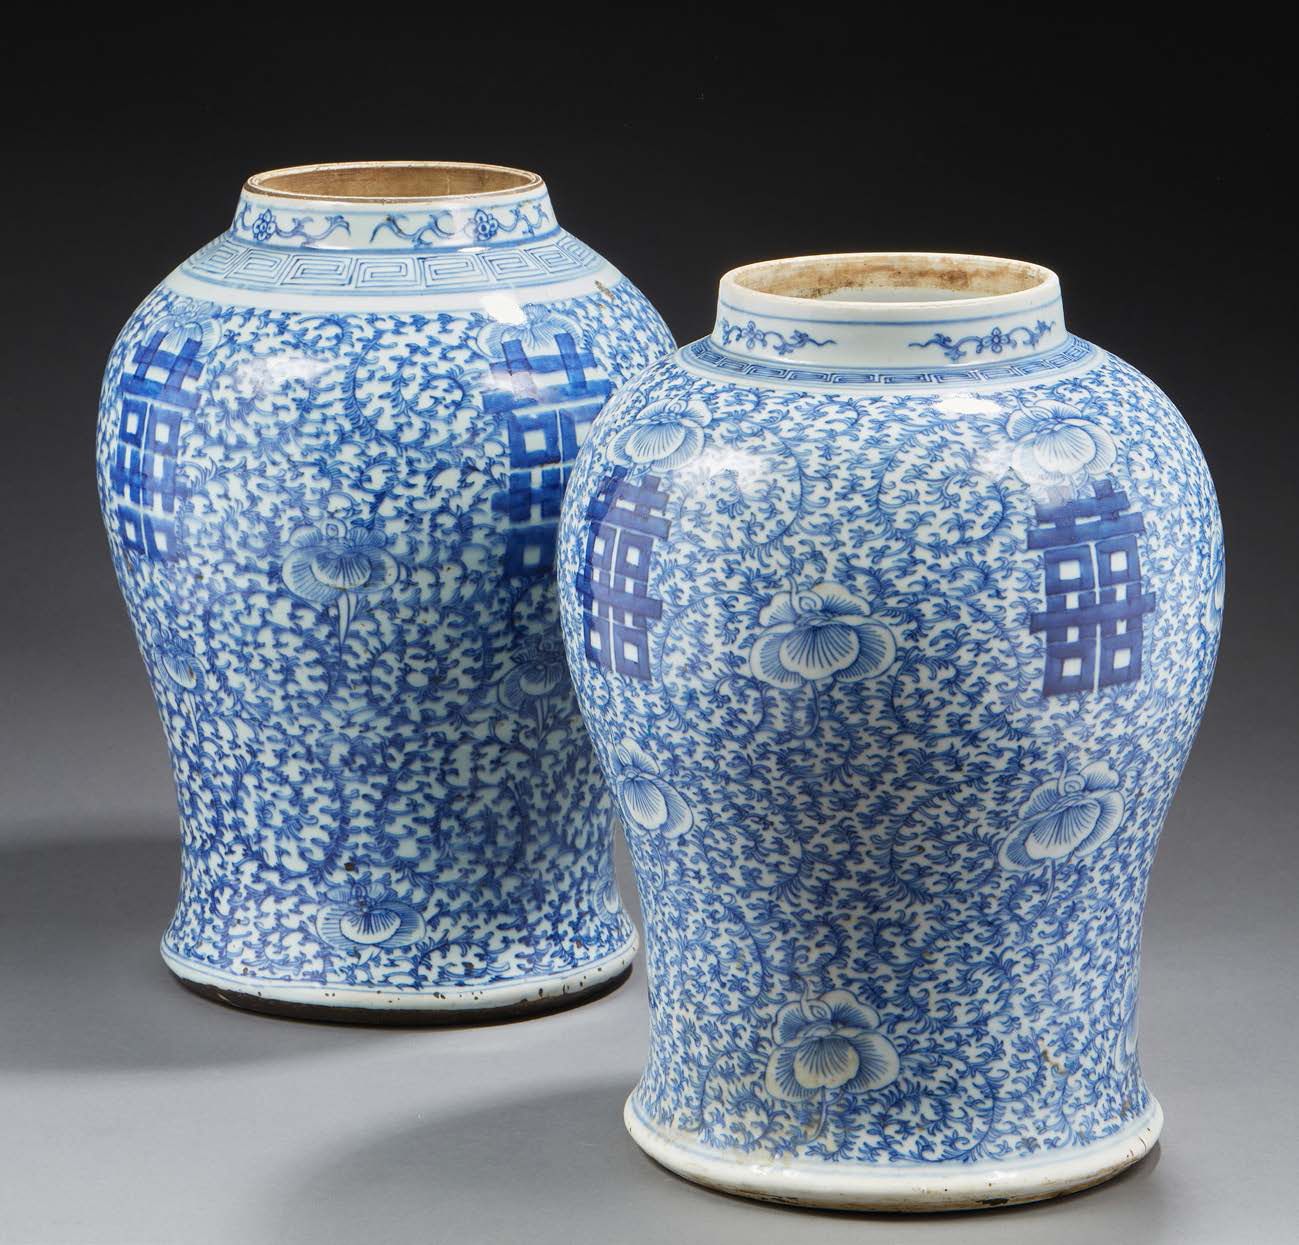 CHINE 瓷质柱形花瓶，釉下青花装饰吉祥物，以卷曲的莲花为框架。背面有一个四字标记。
19世纪末
高37厘米